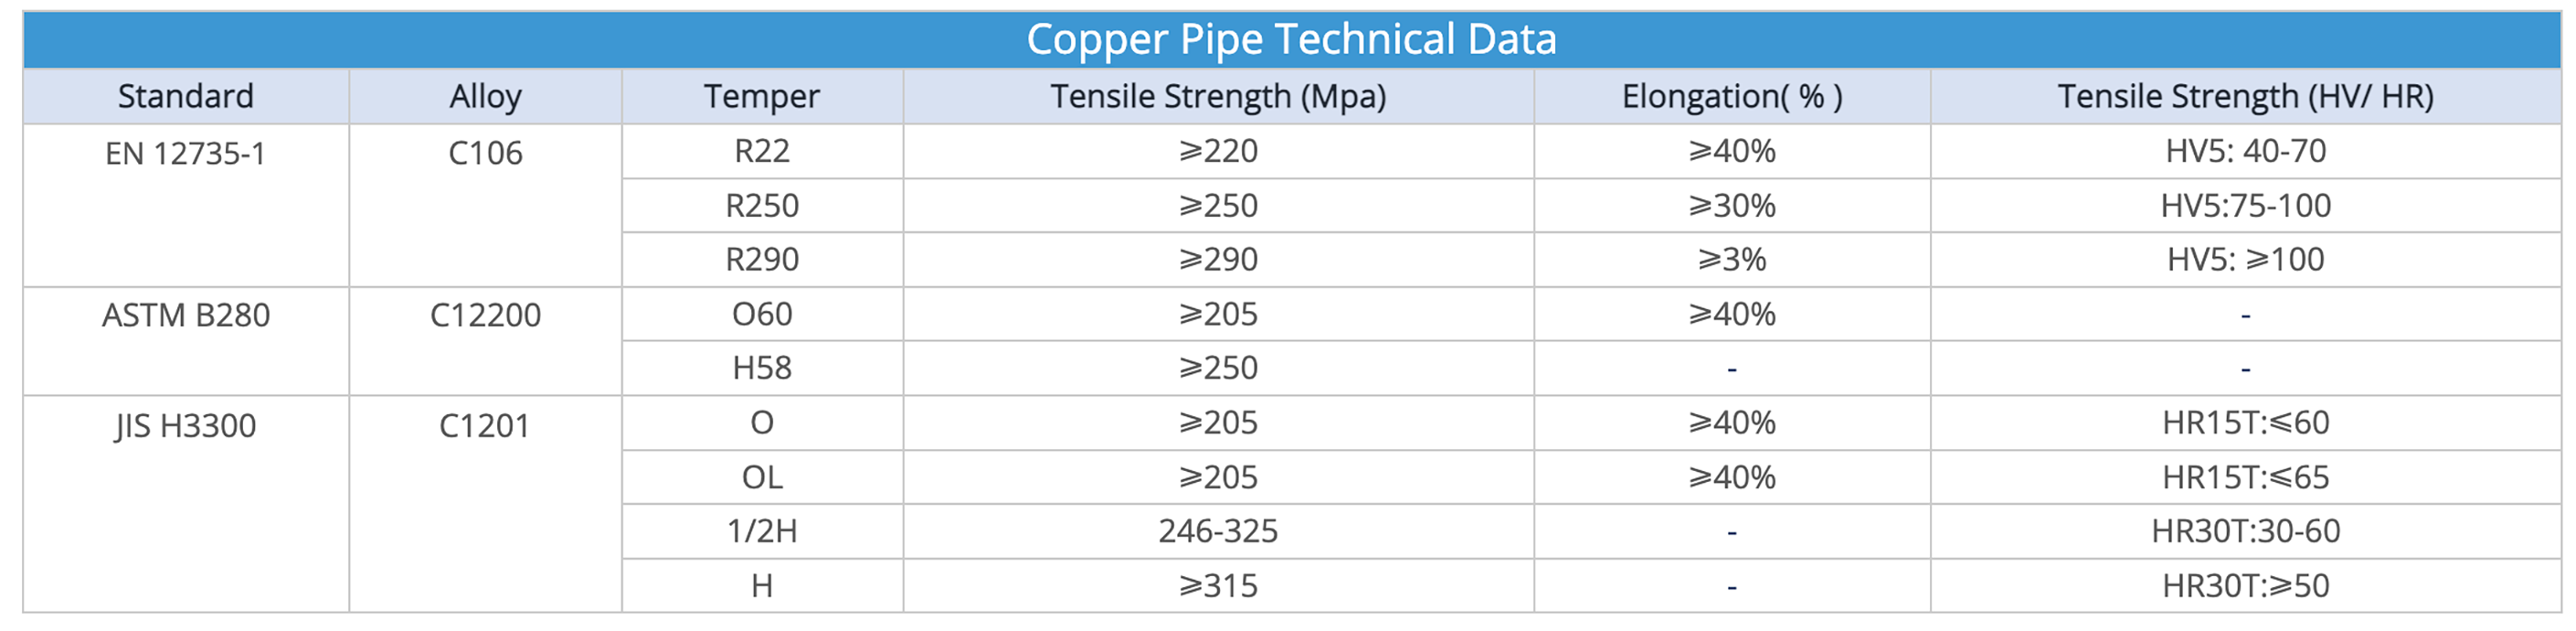 Copper pipe standard